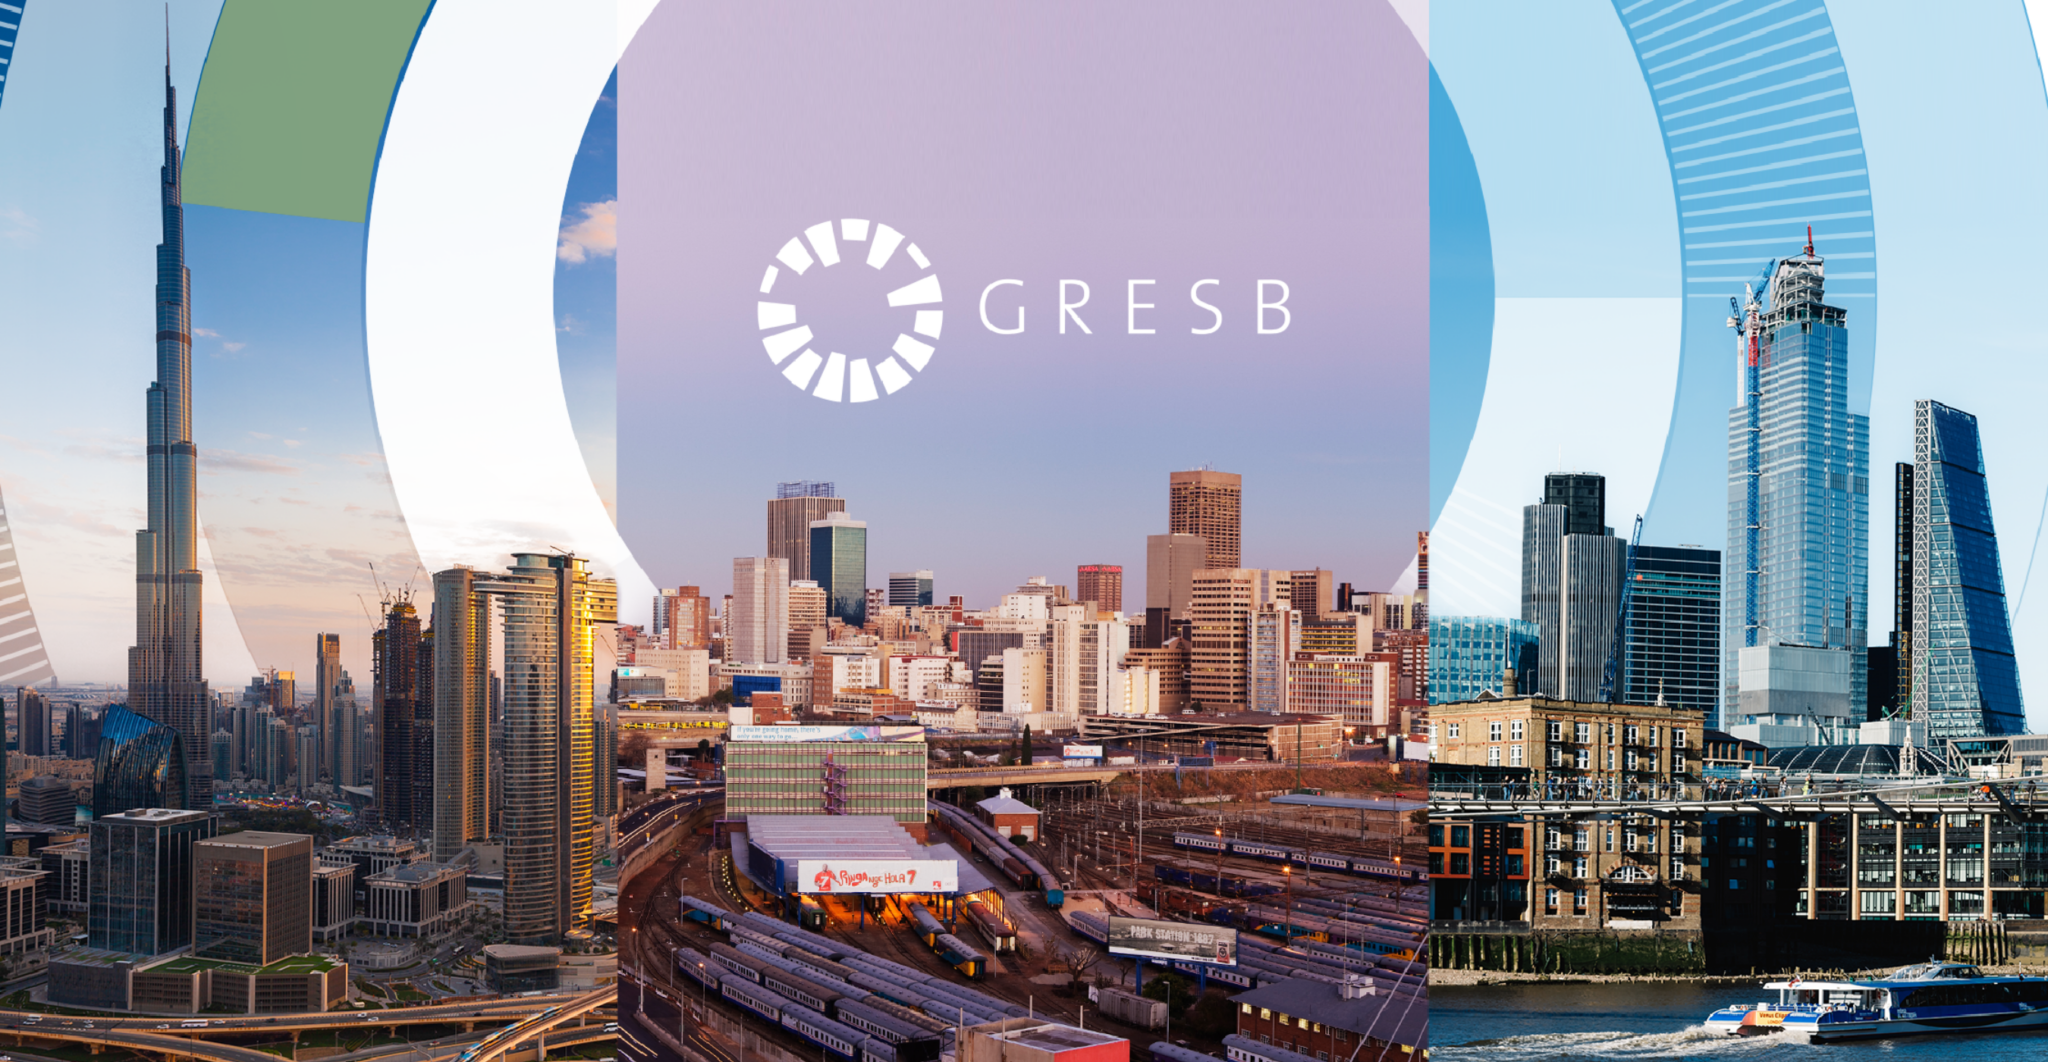 GRESB Regional Insights event